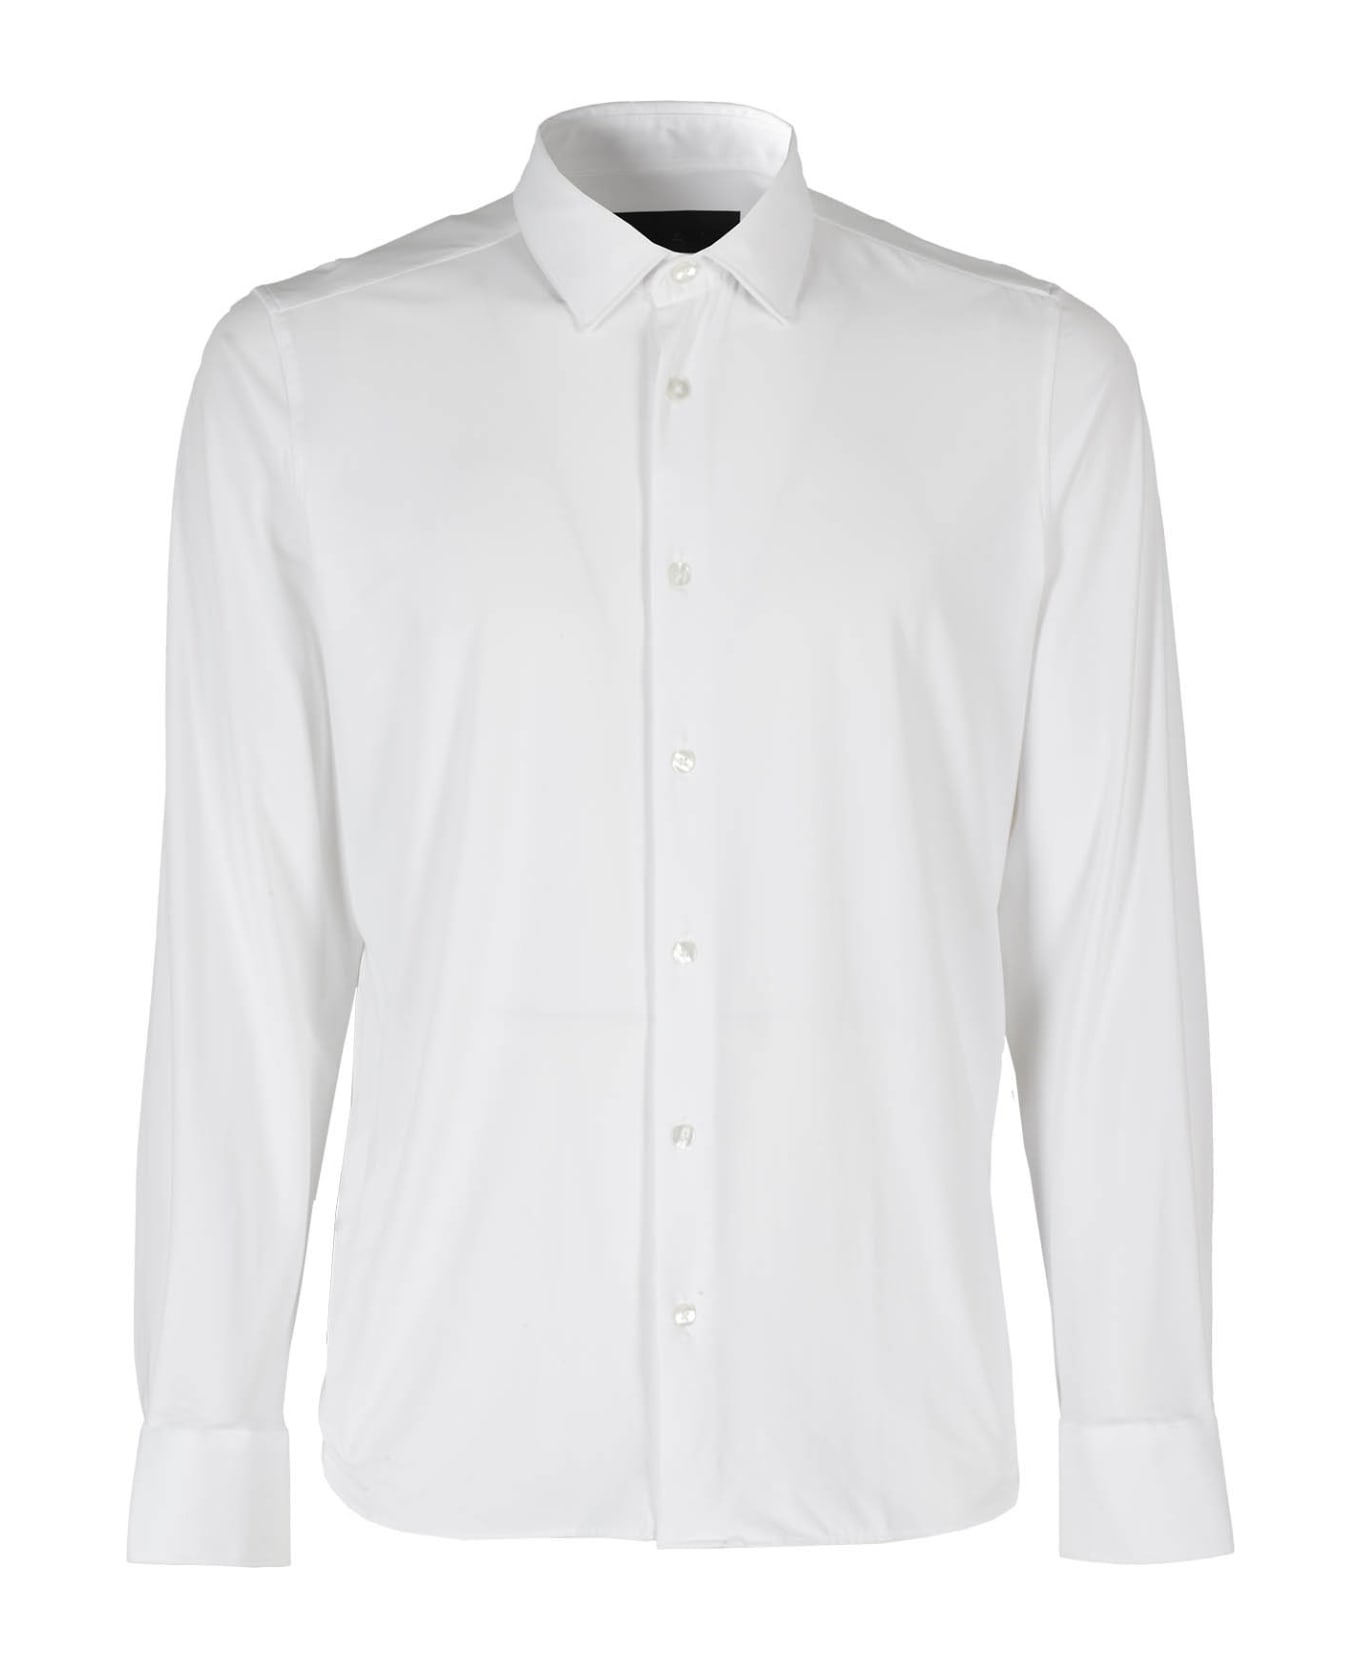 RRD - Roberto Ricci Design Oxford Oper Shirt - Bianco